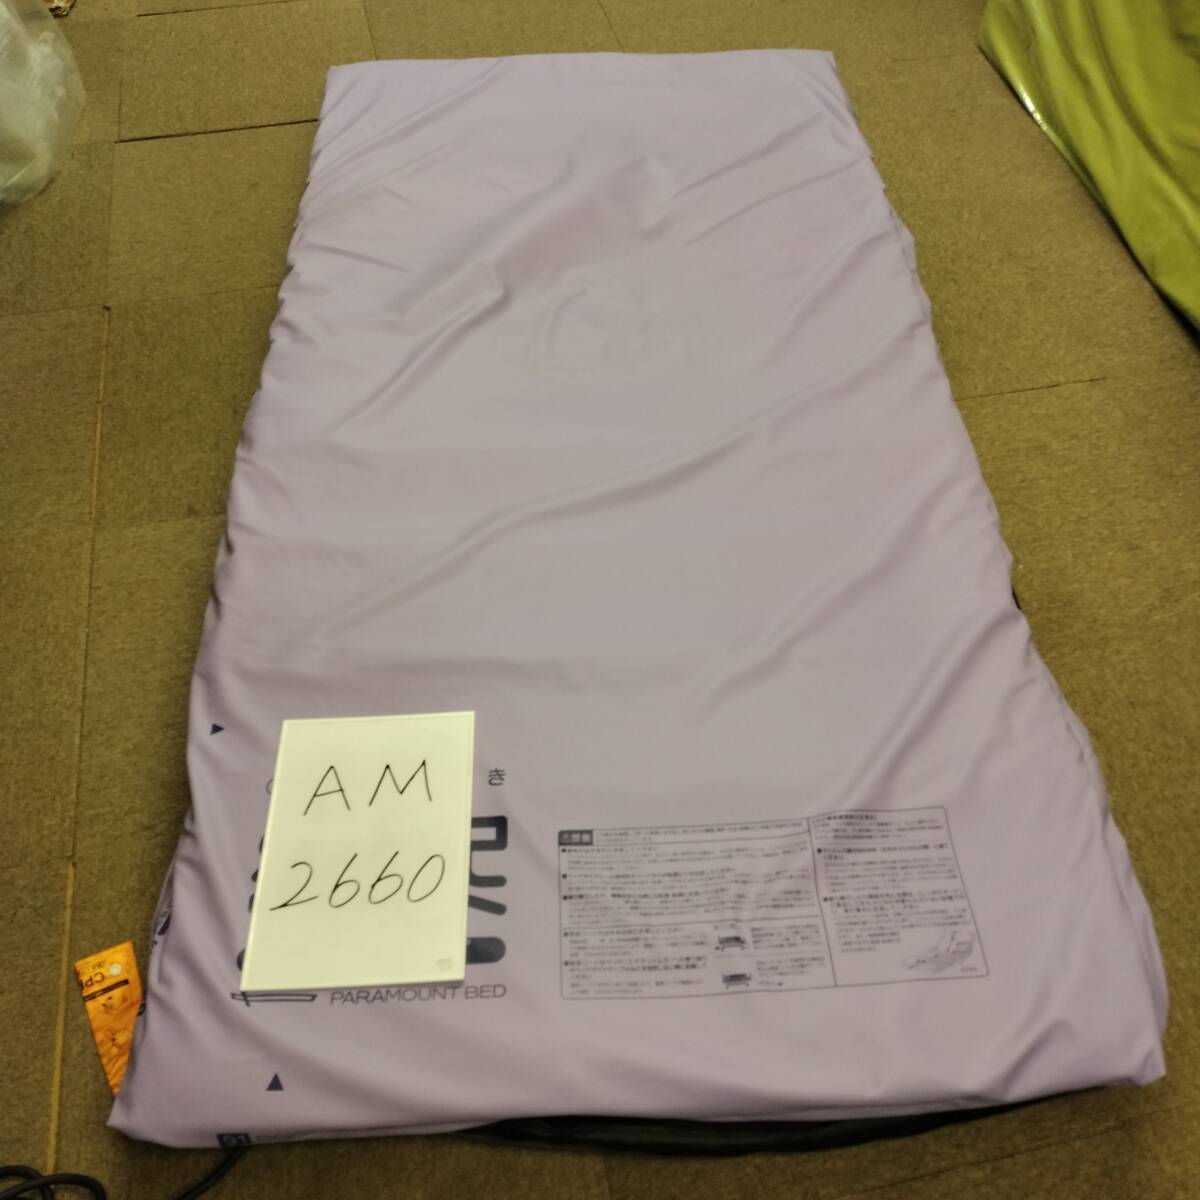 (AM-2660)[ used ]pala mount bed air mattress here ....3D KE-932QS disinfection washing ending nursing articles 